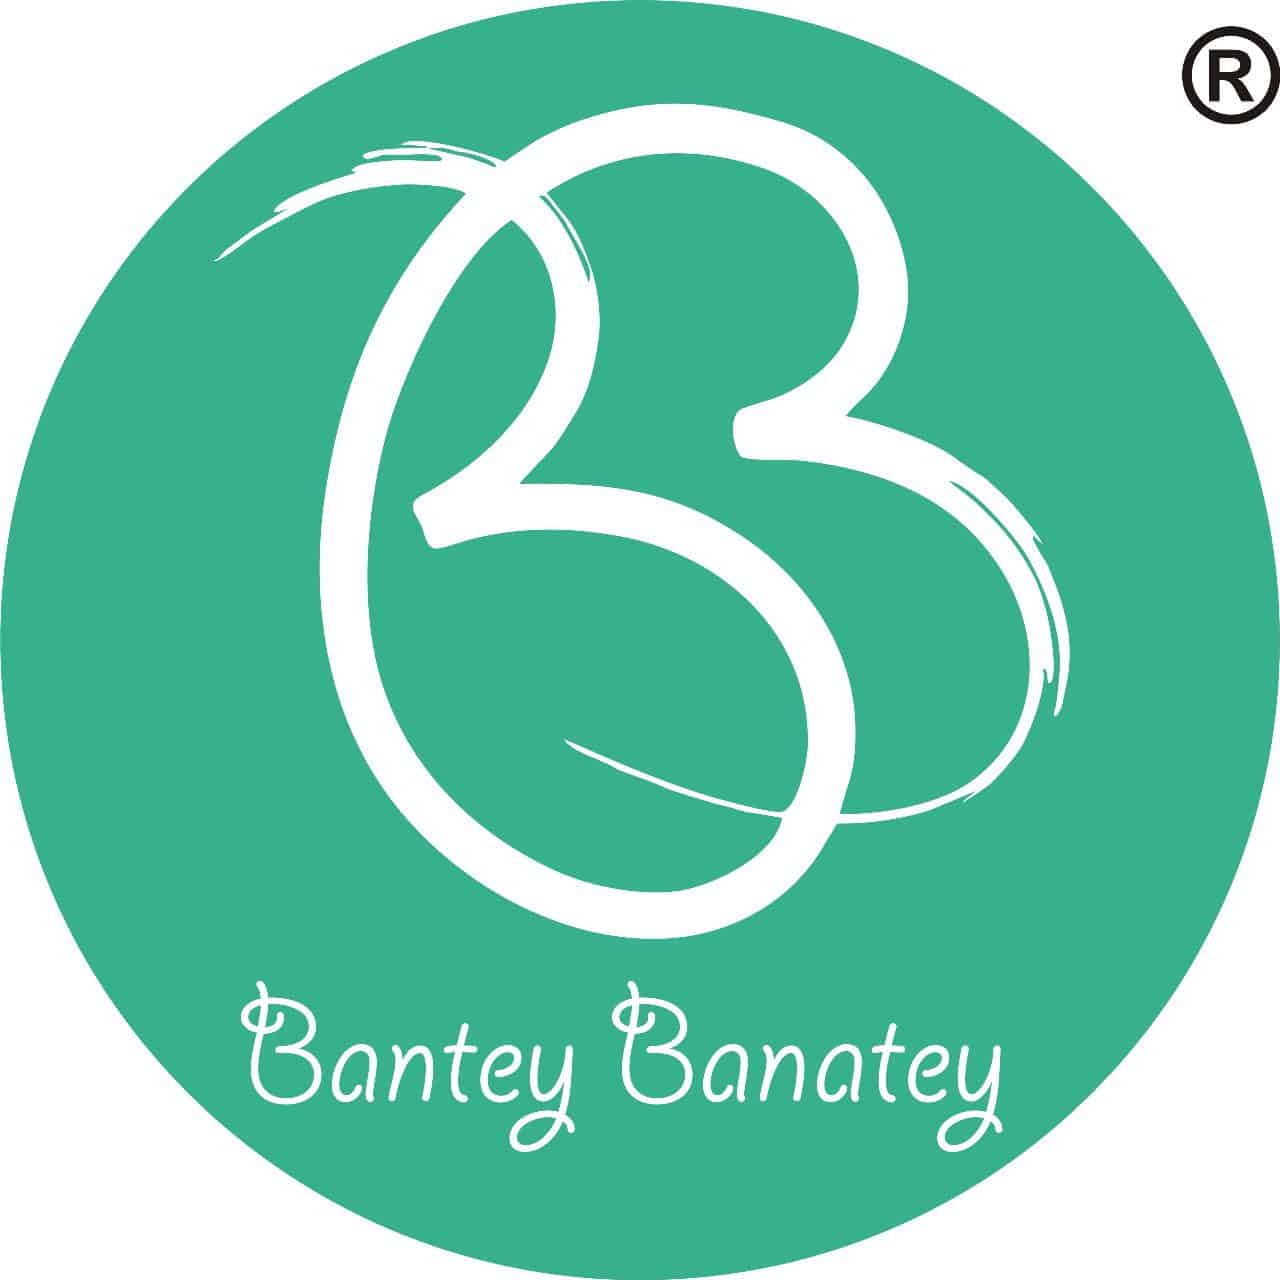 BanteyBanatey